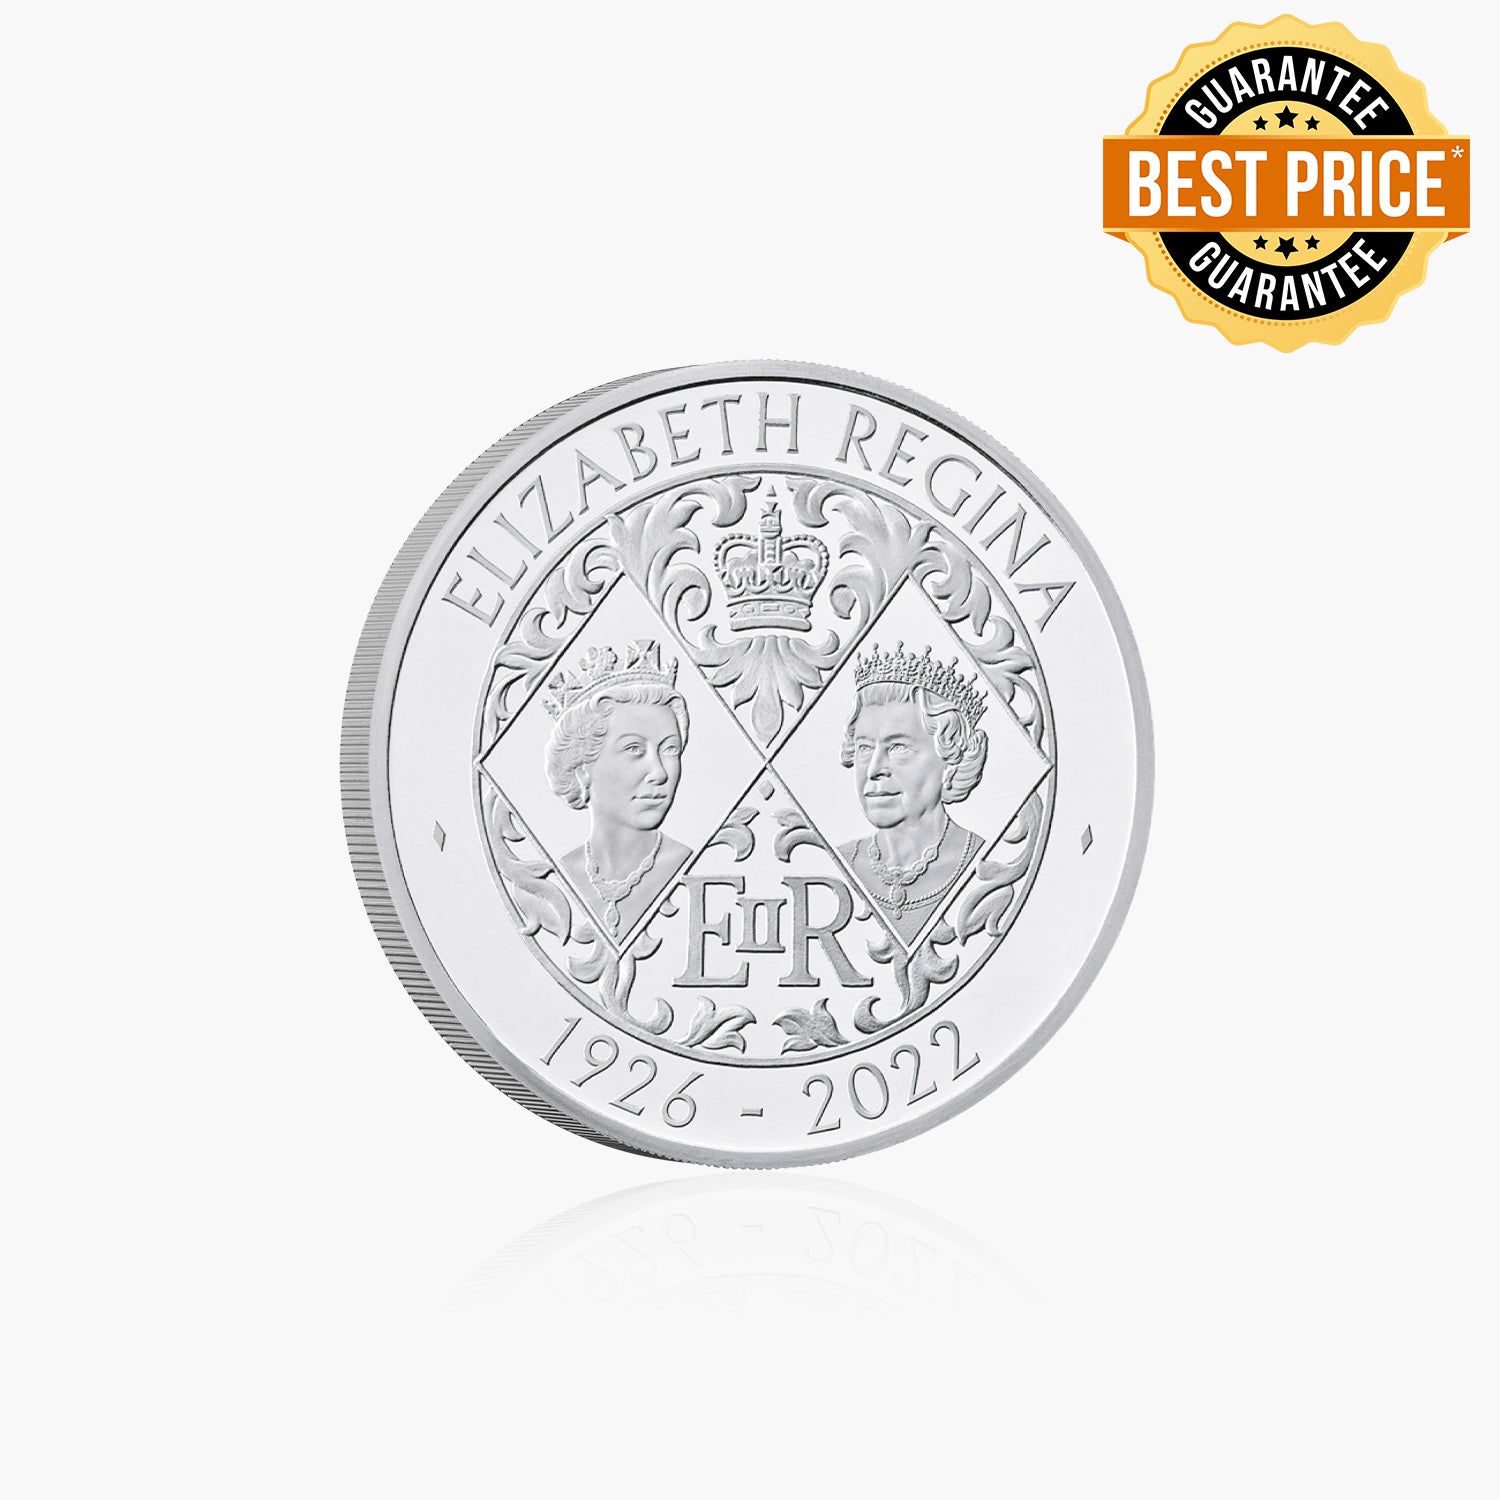 Her Majesty Queen Elizabeth II 2022 £5 Coin - King Charles III first portrait